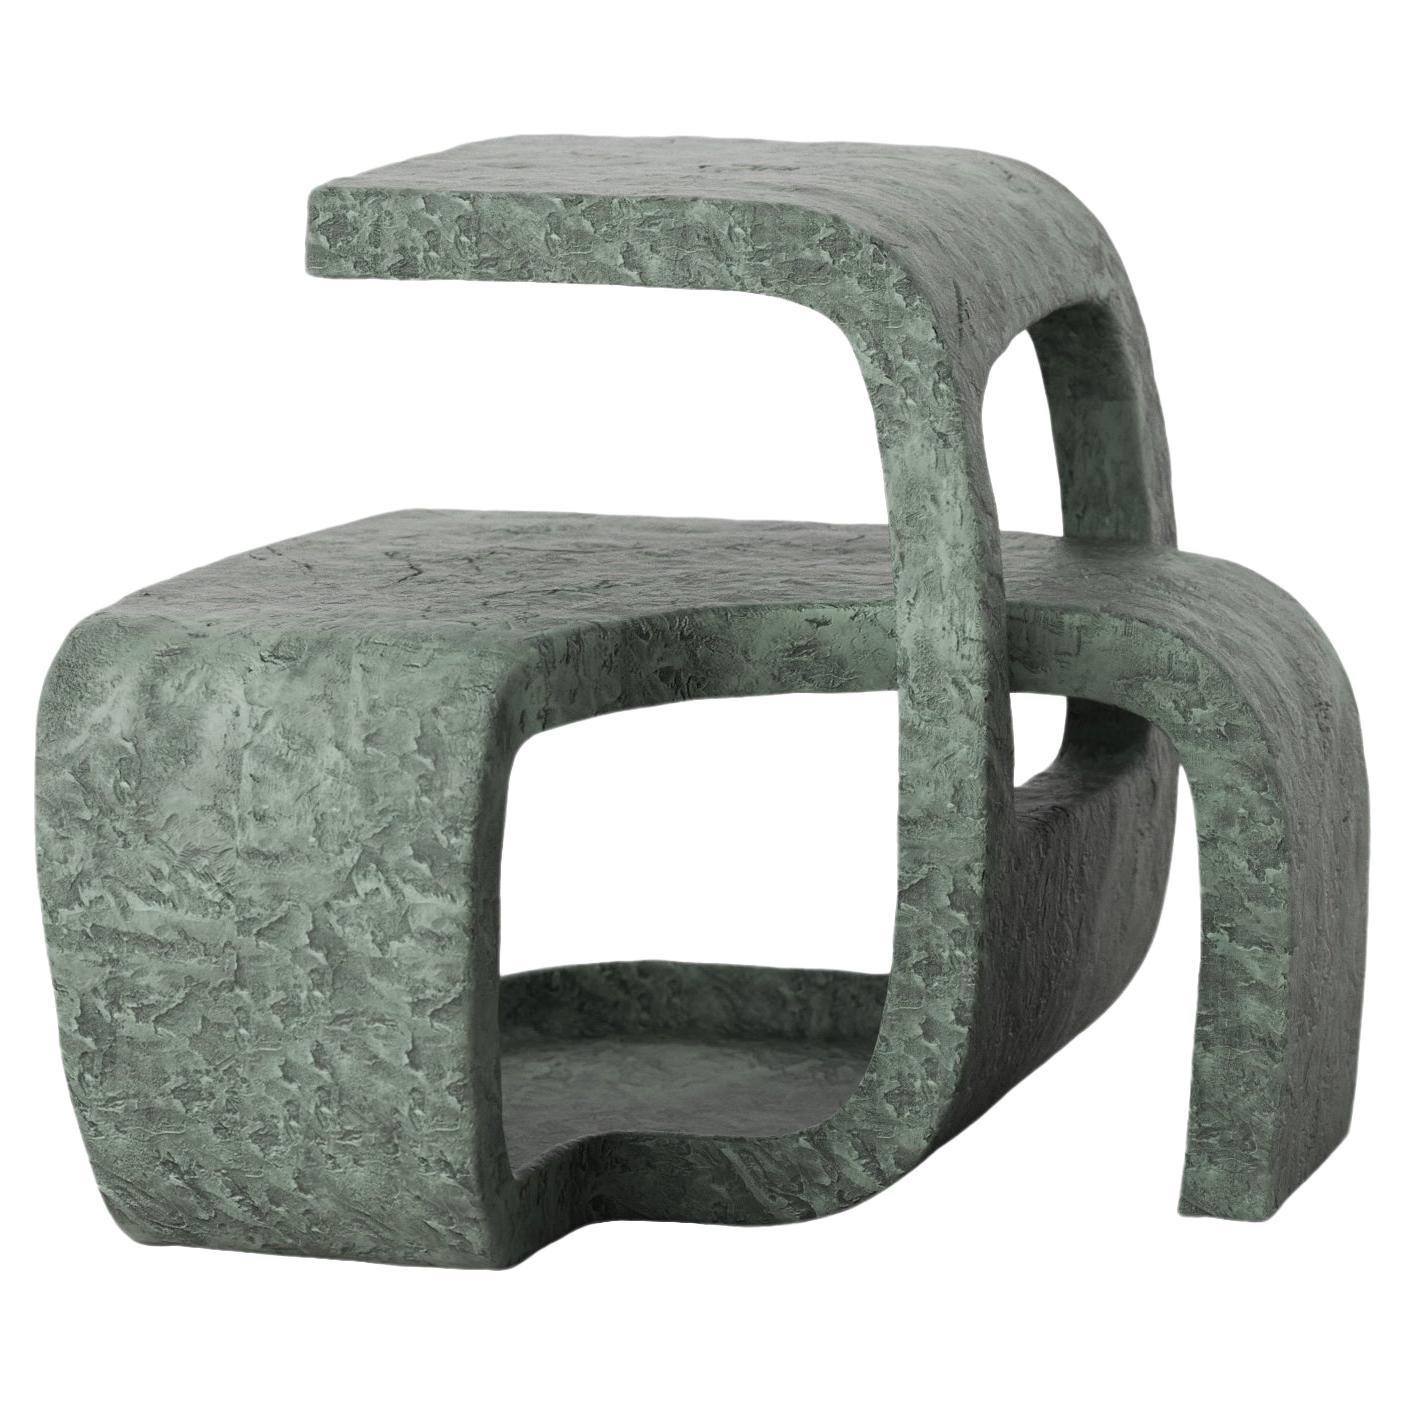 Contemporary Limited Edition Bronze Table, Vertigo V1 by Simone Fanciullacci For Sale